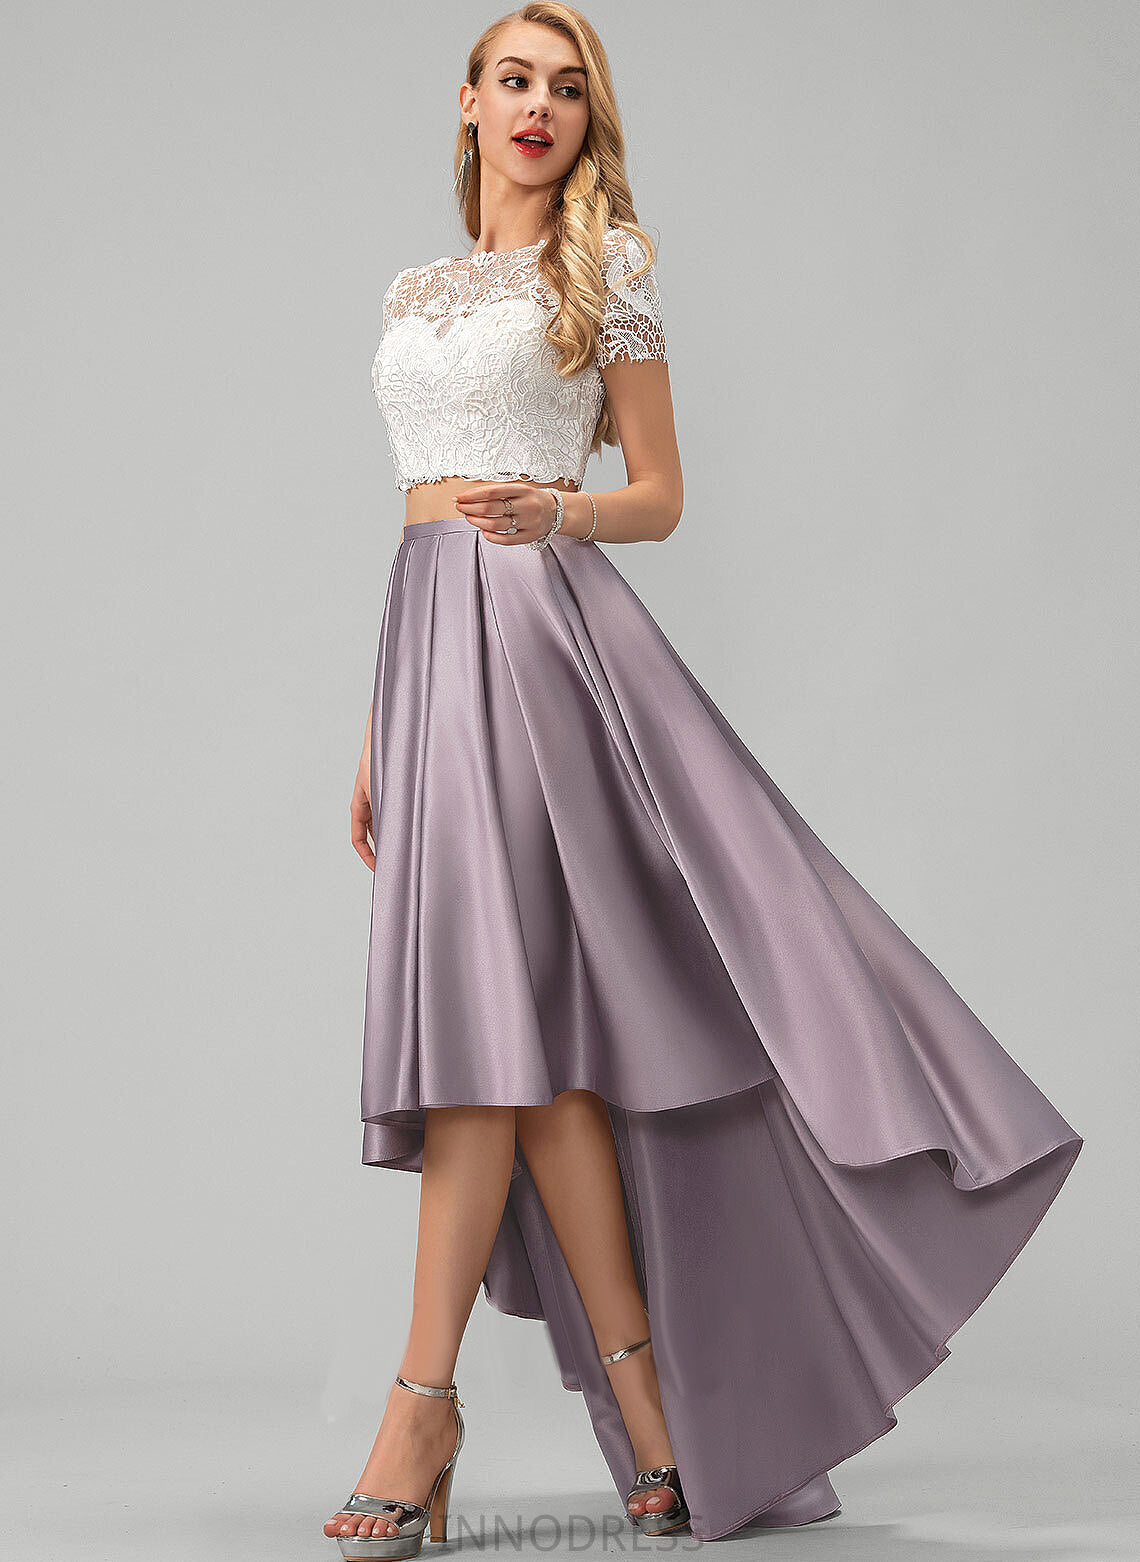 Pockets Prom Dresses Scoop Lace A-Line Satin With Asymmetrical Celeste Neck